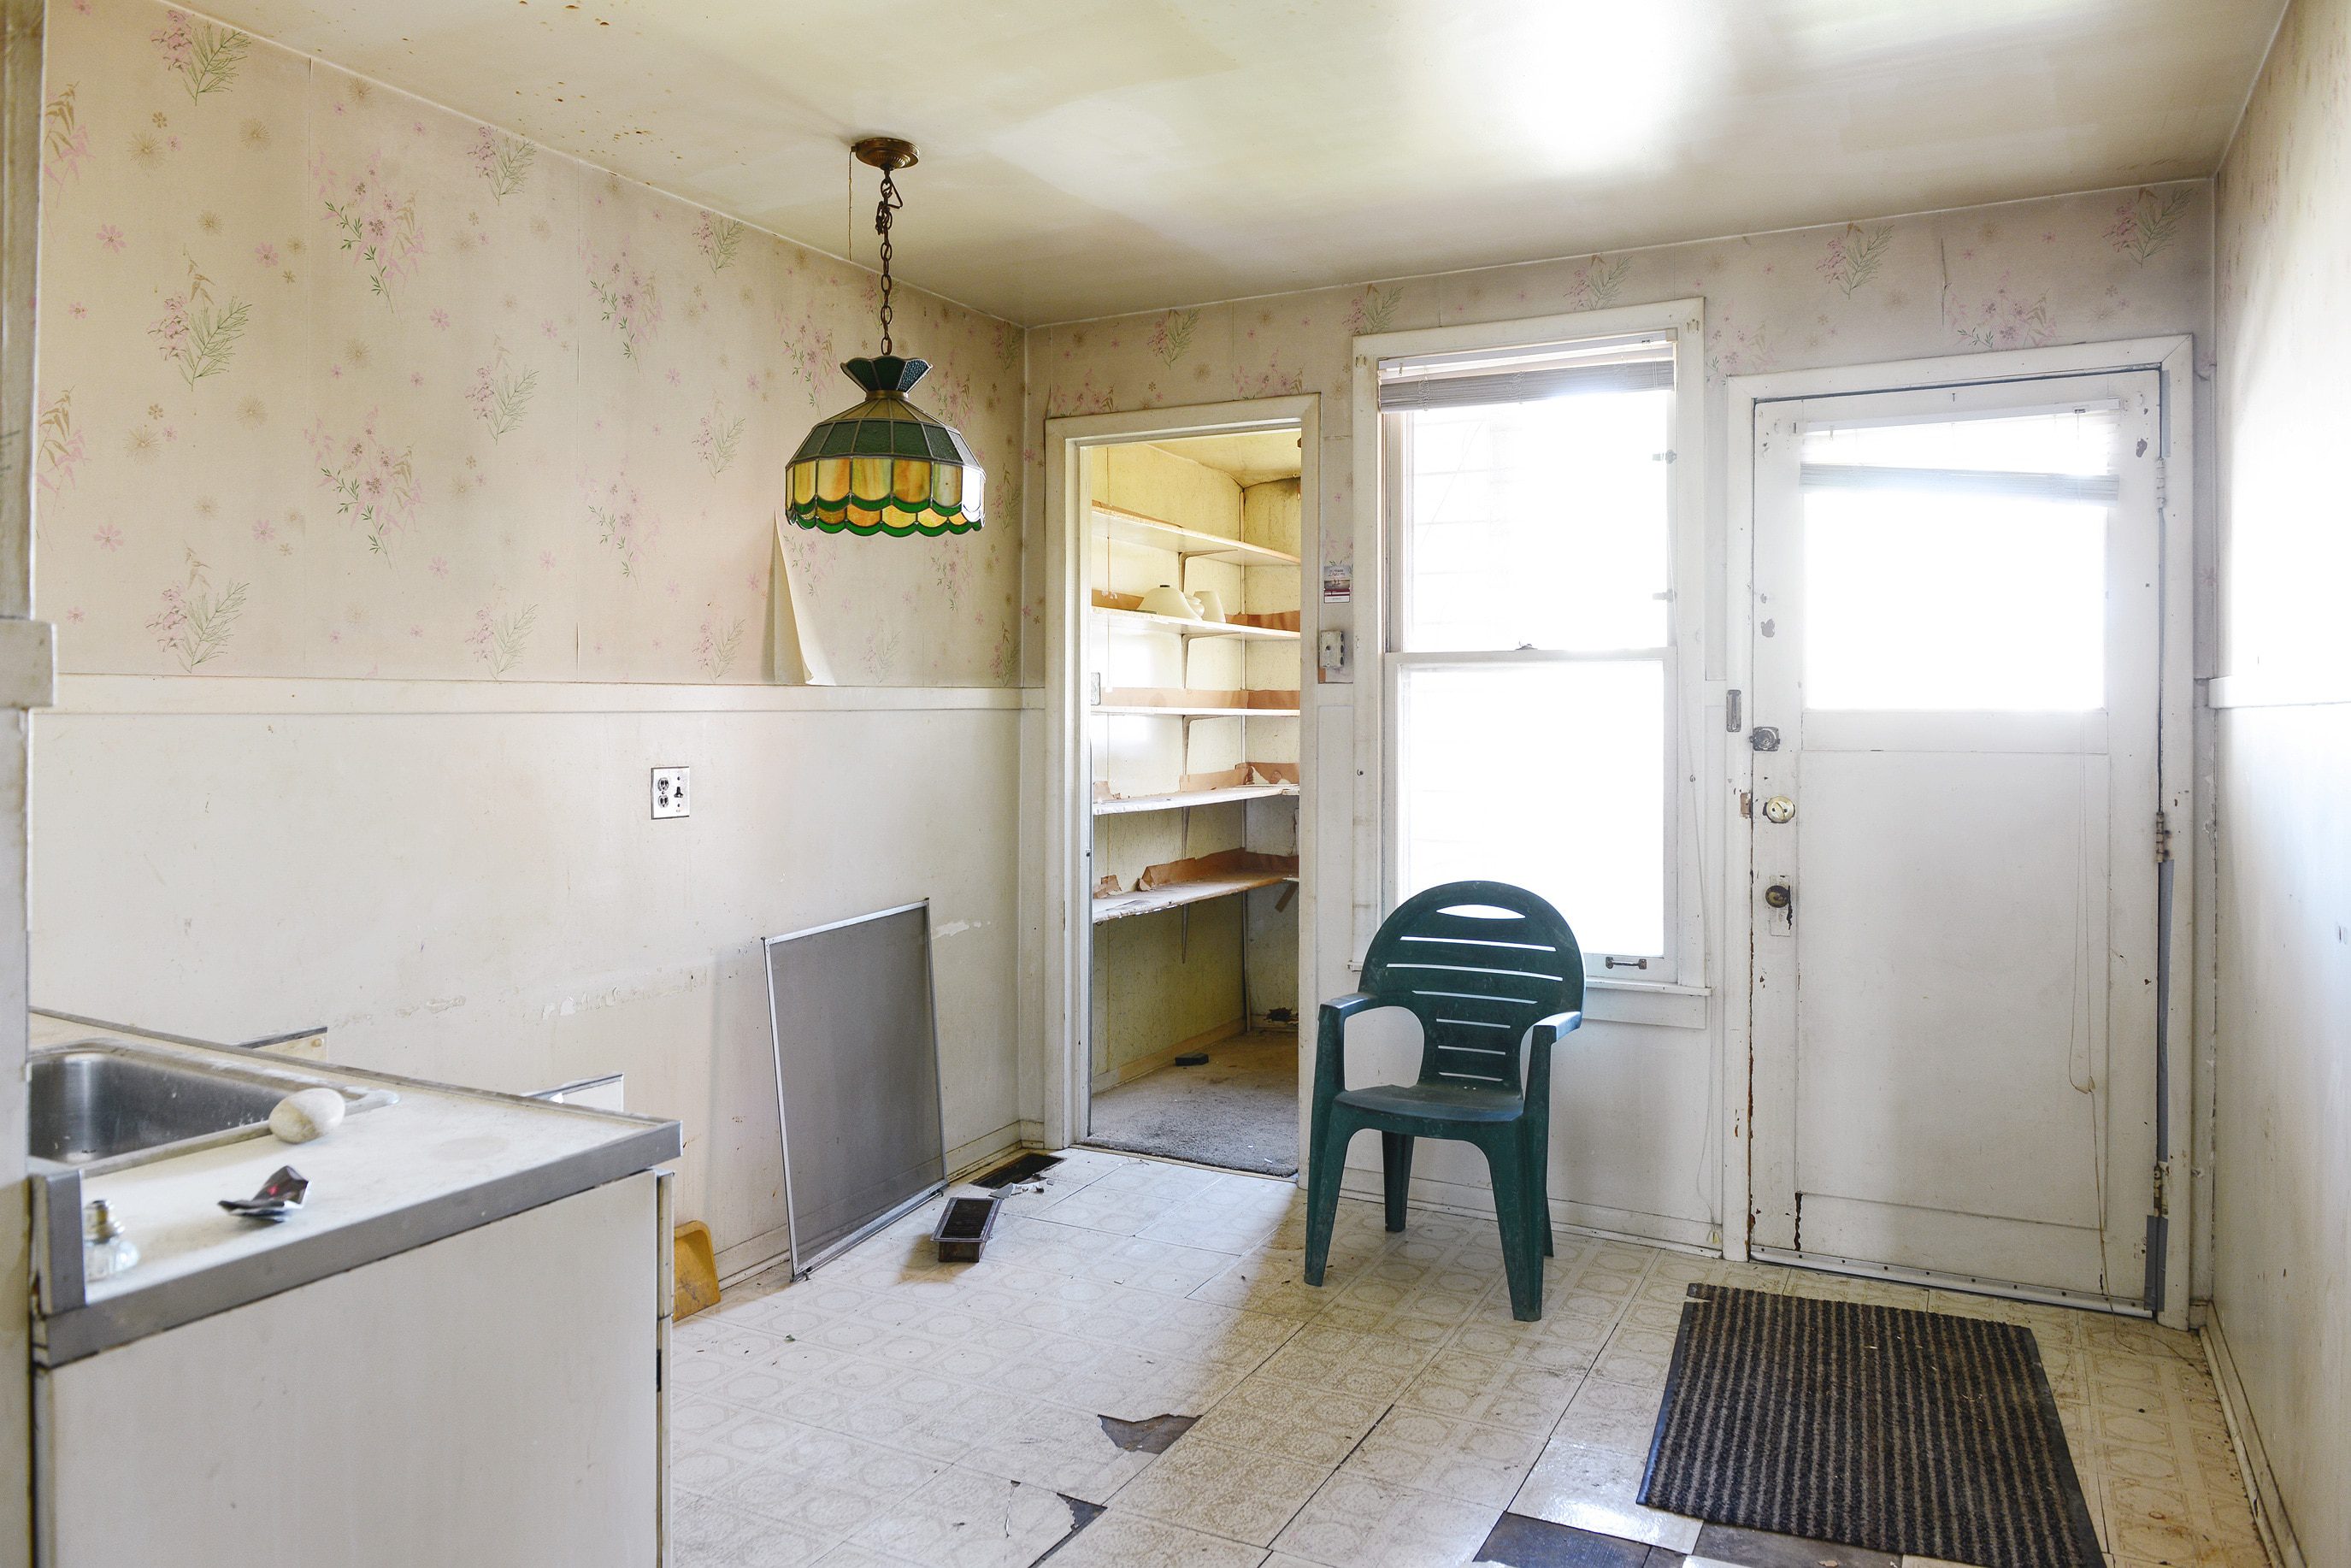 A kitchen 'before' | via Yellow Brick Home